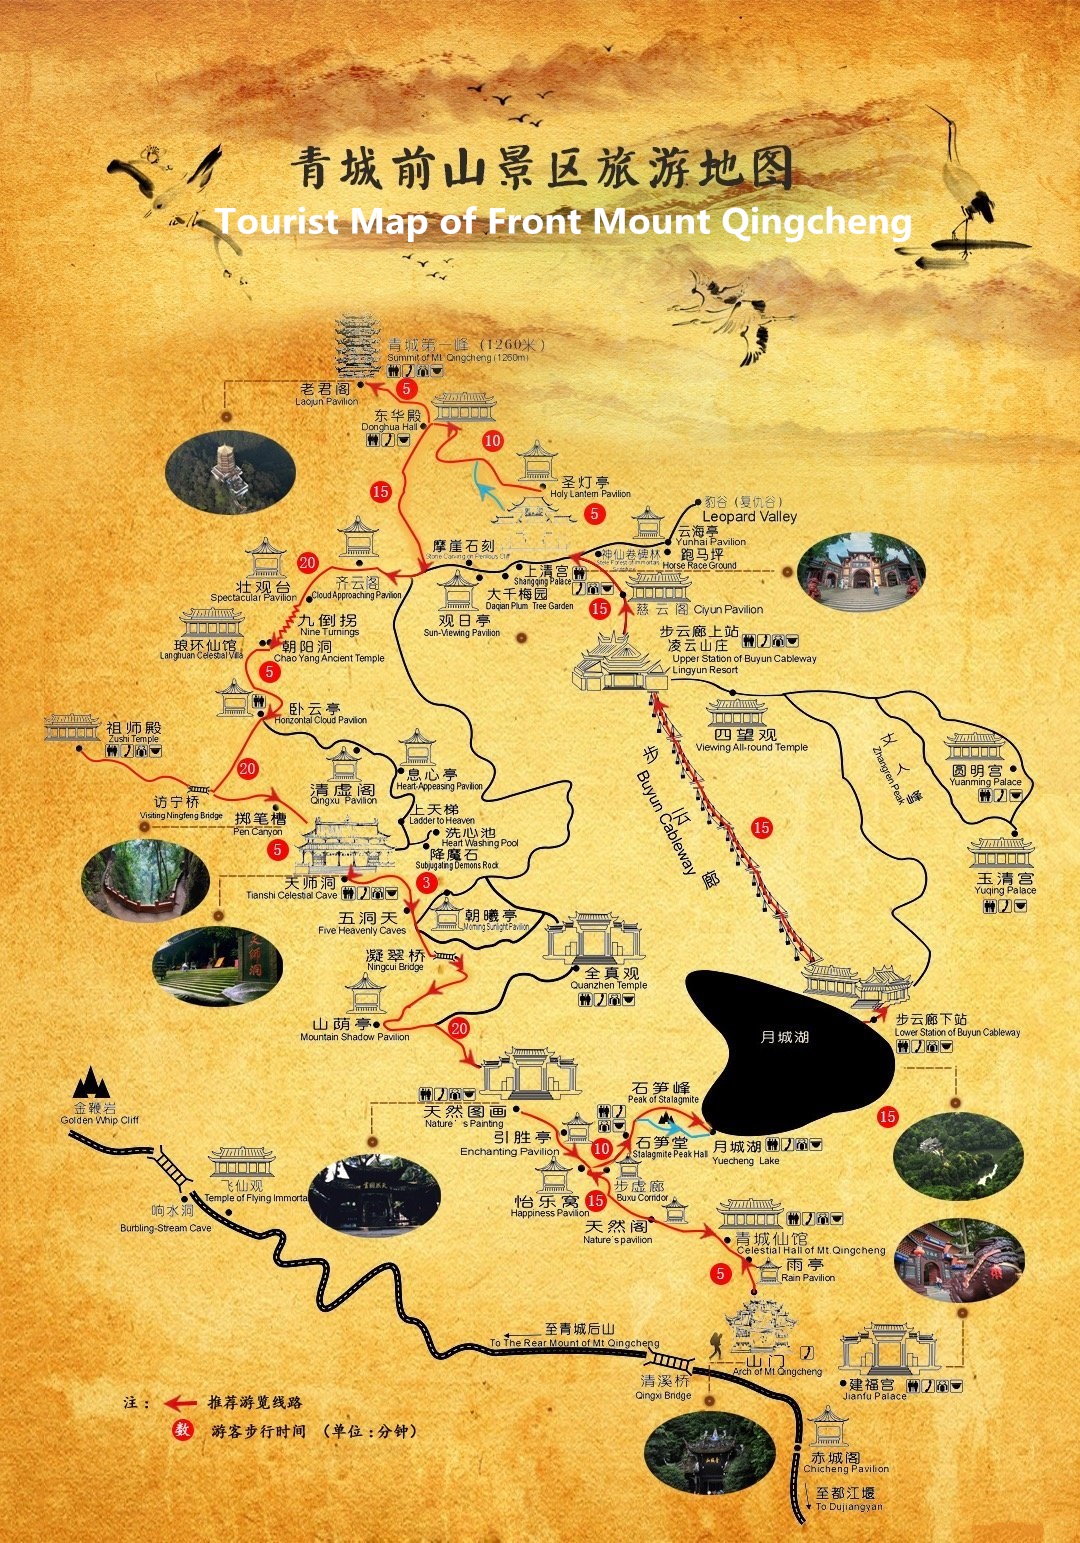 daoism map